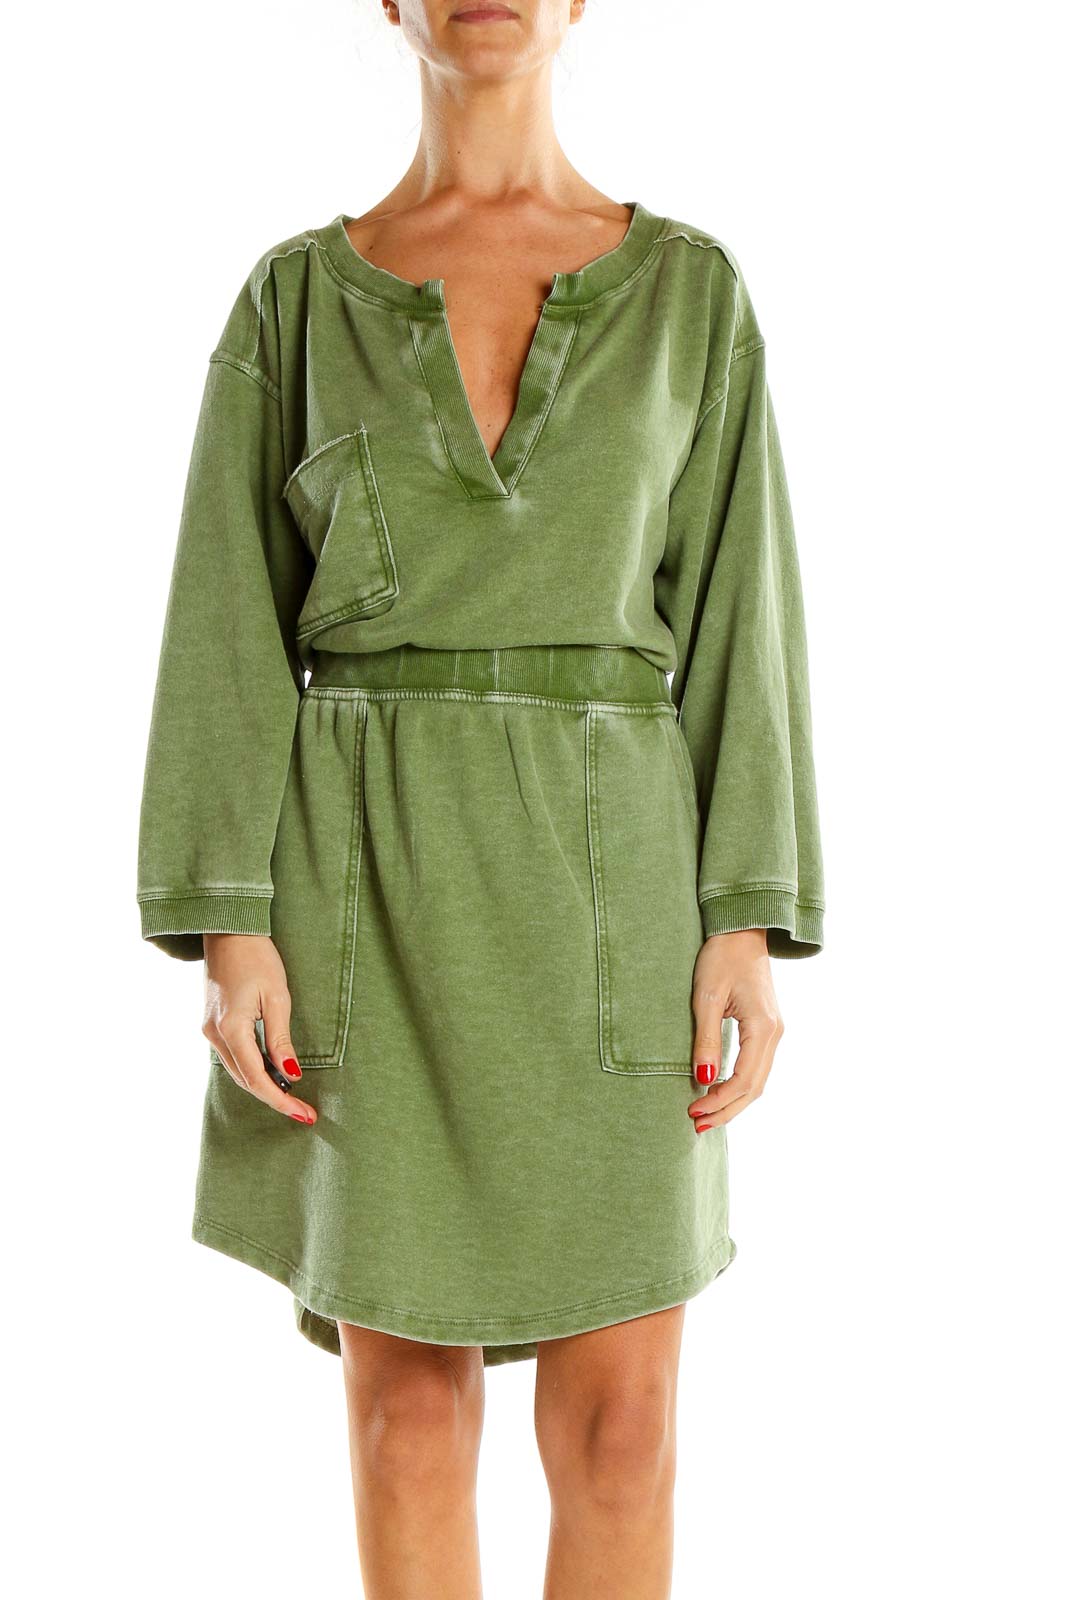 Green Bohemian Sweater Dress Front